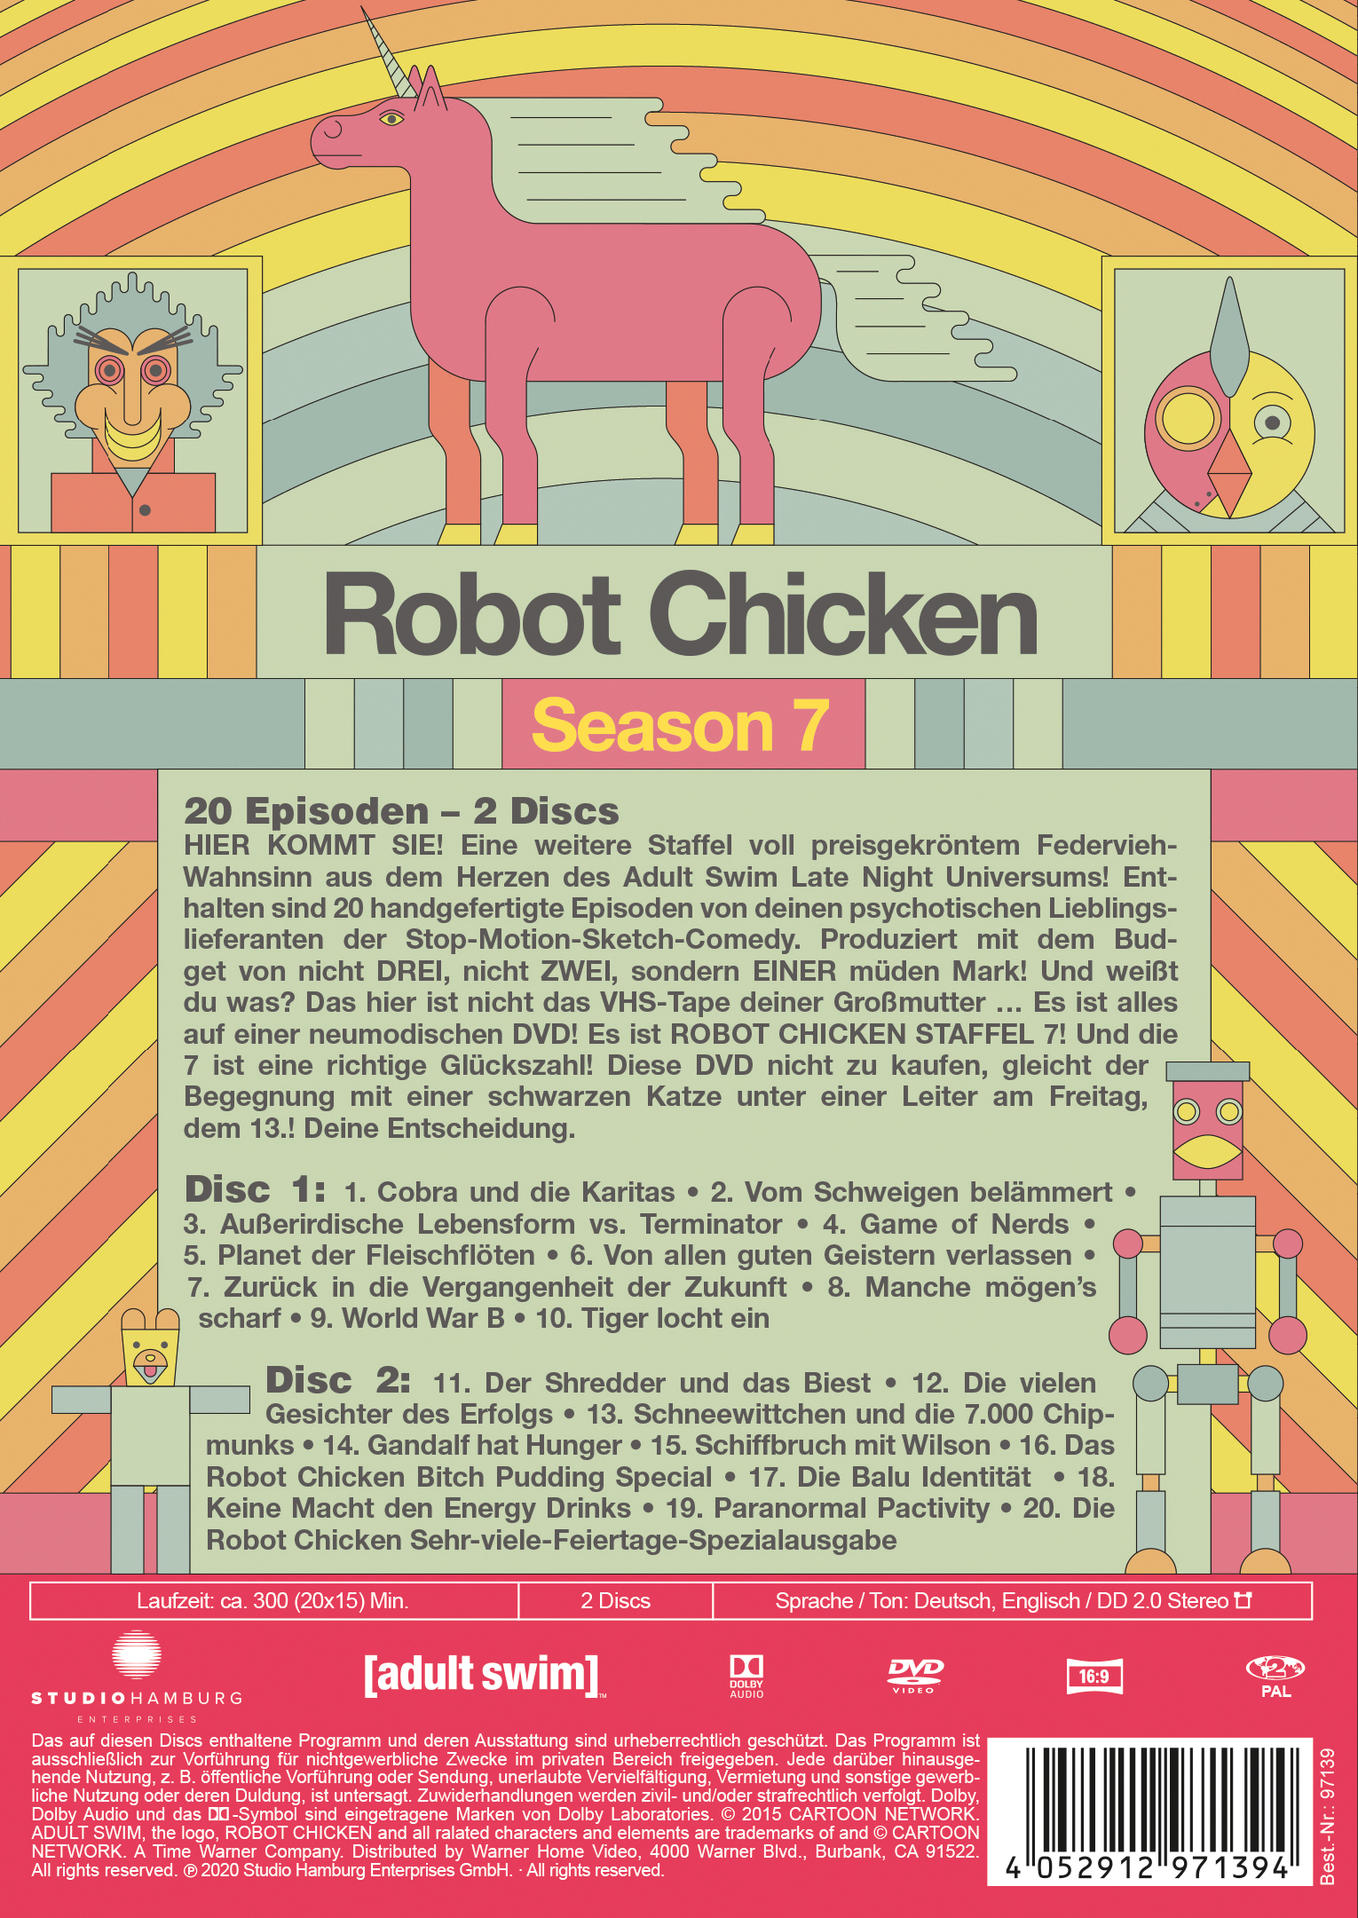 Season Chicken: DVD 7 Robot